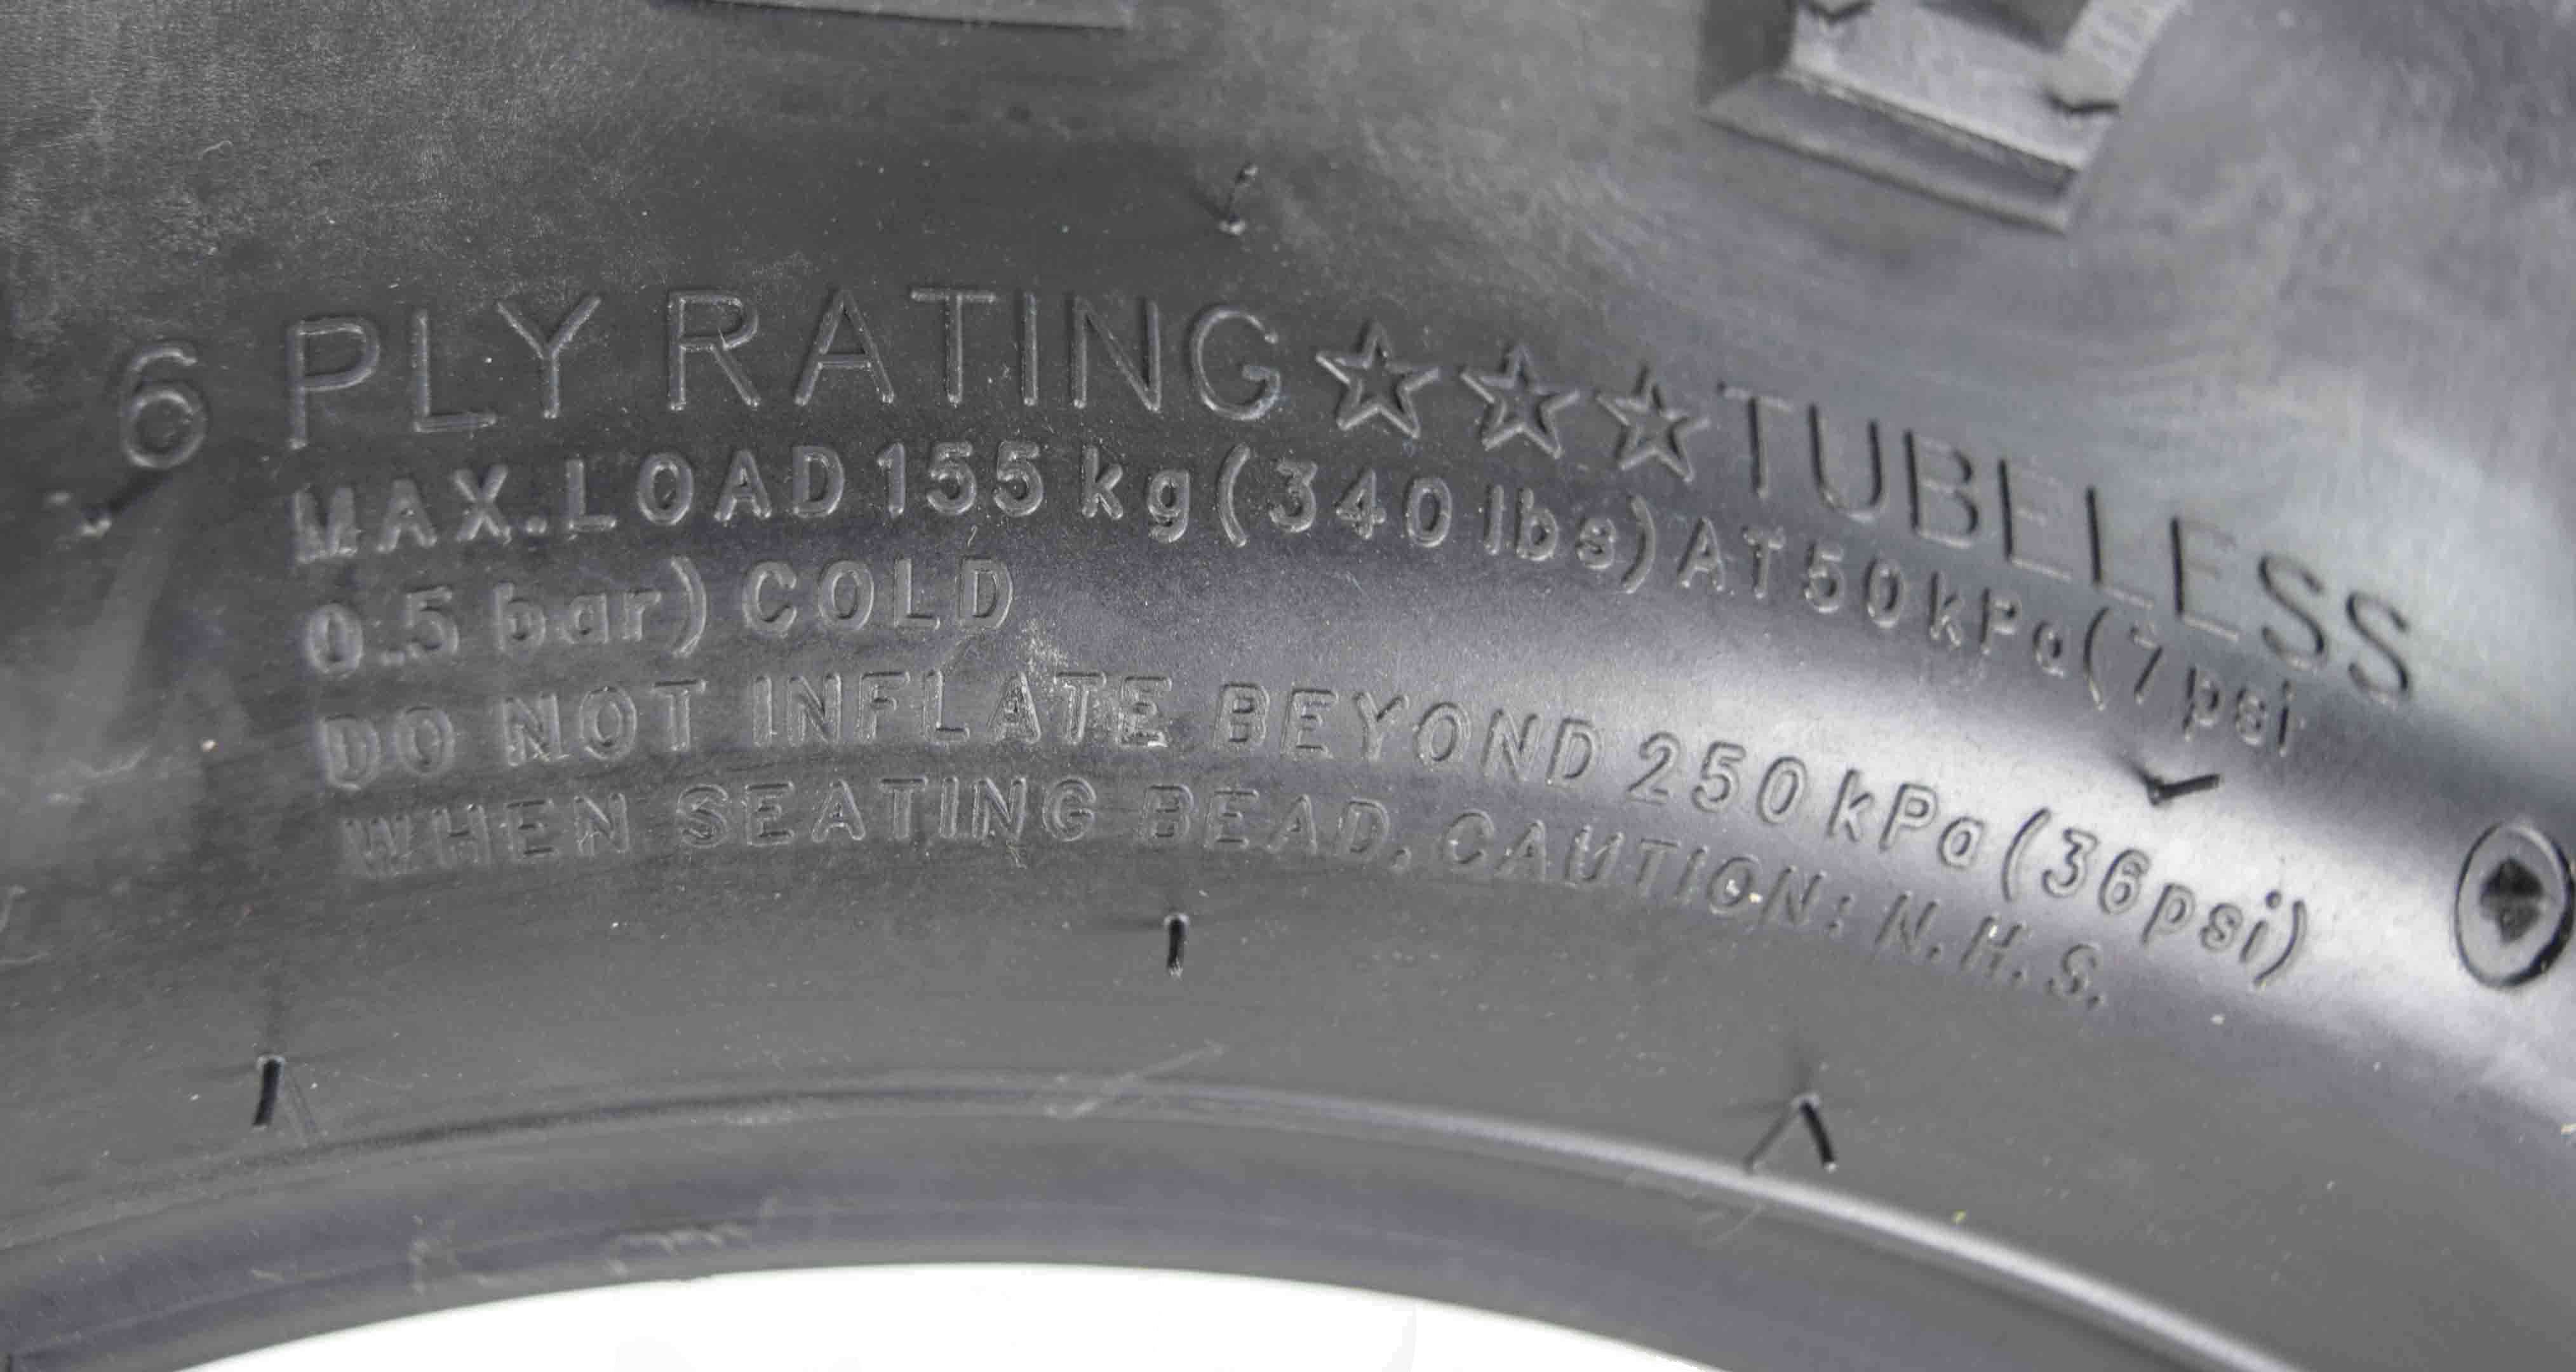 Kenda Bear Claw EVO 25x8-12 Front & 25x10-12 Rear ATV/UTV Tires Set with Bottle Opener Keychain